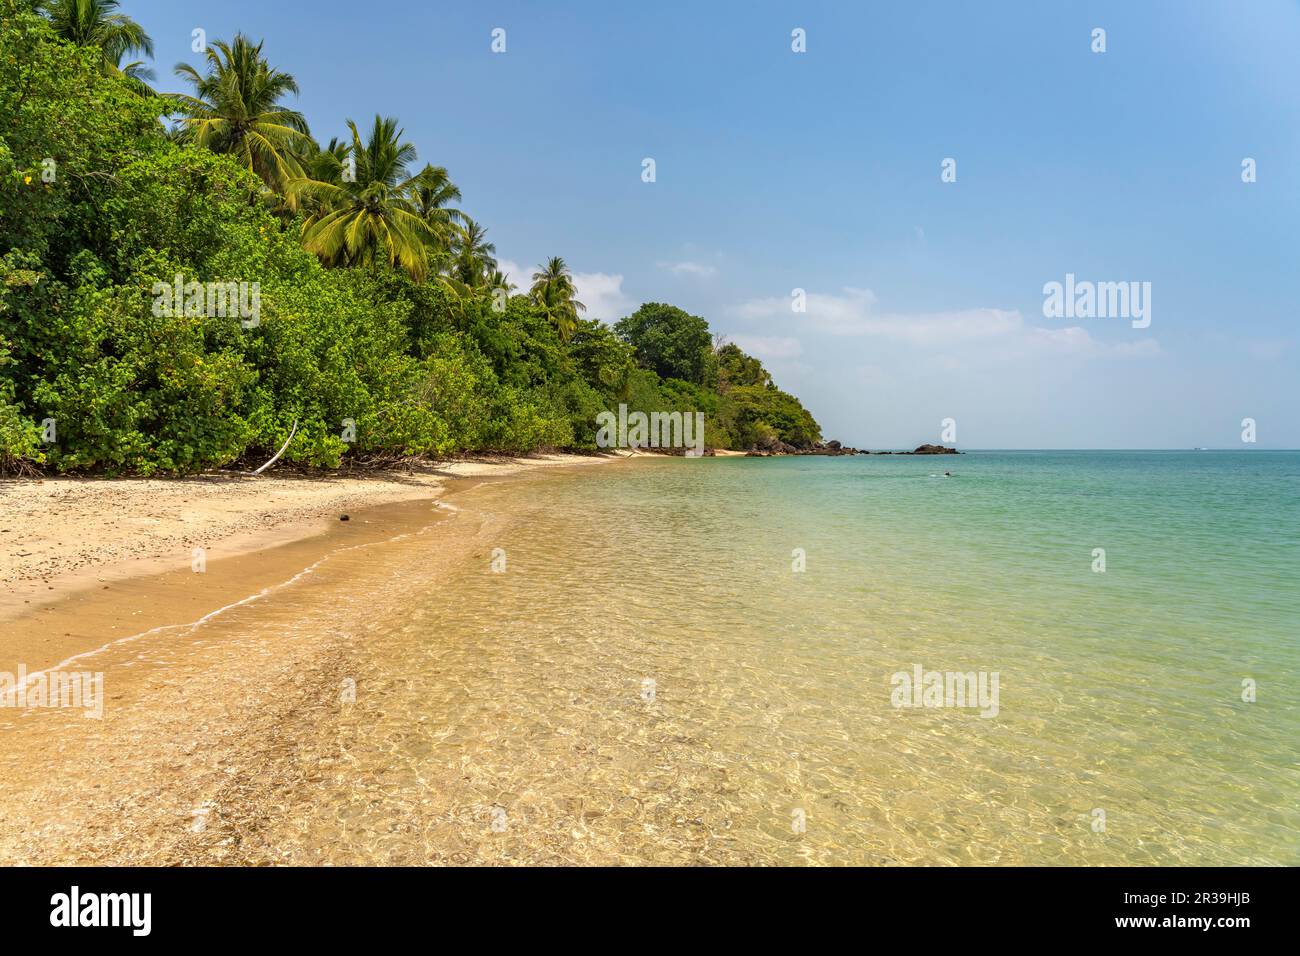 Panyang Beach auf der Insel Koh Libong in der Andamanensee, Thailand, Asien  |  Panyang Beach on Ko Libong, island in the Andaman Sea, Thailand, Asia Stock Photo